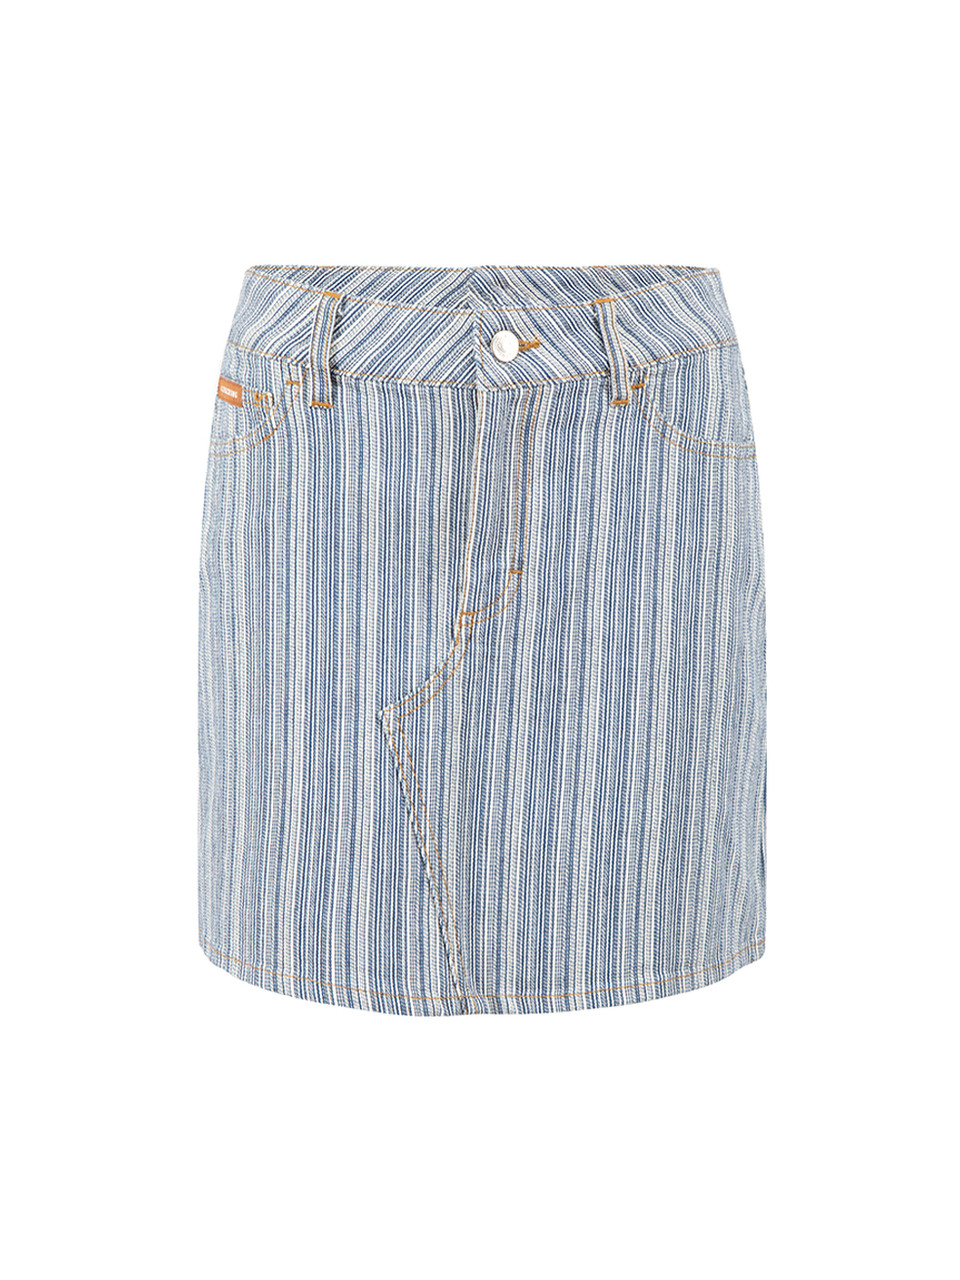 Louis Vuitton Parasol Stripes Denim Shorts